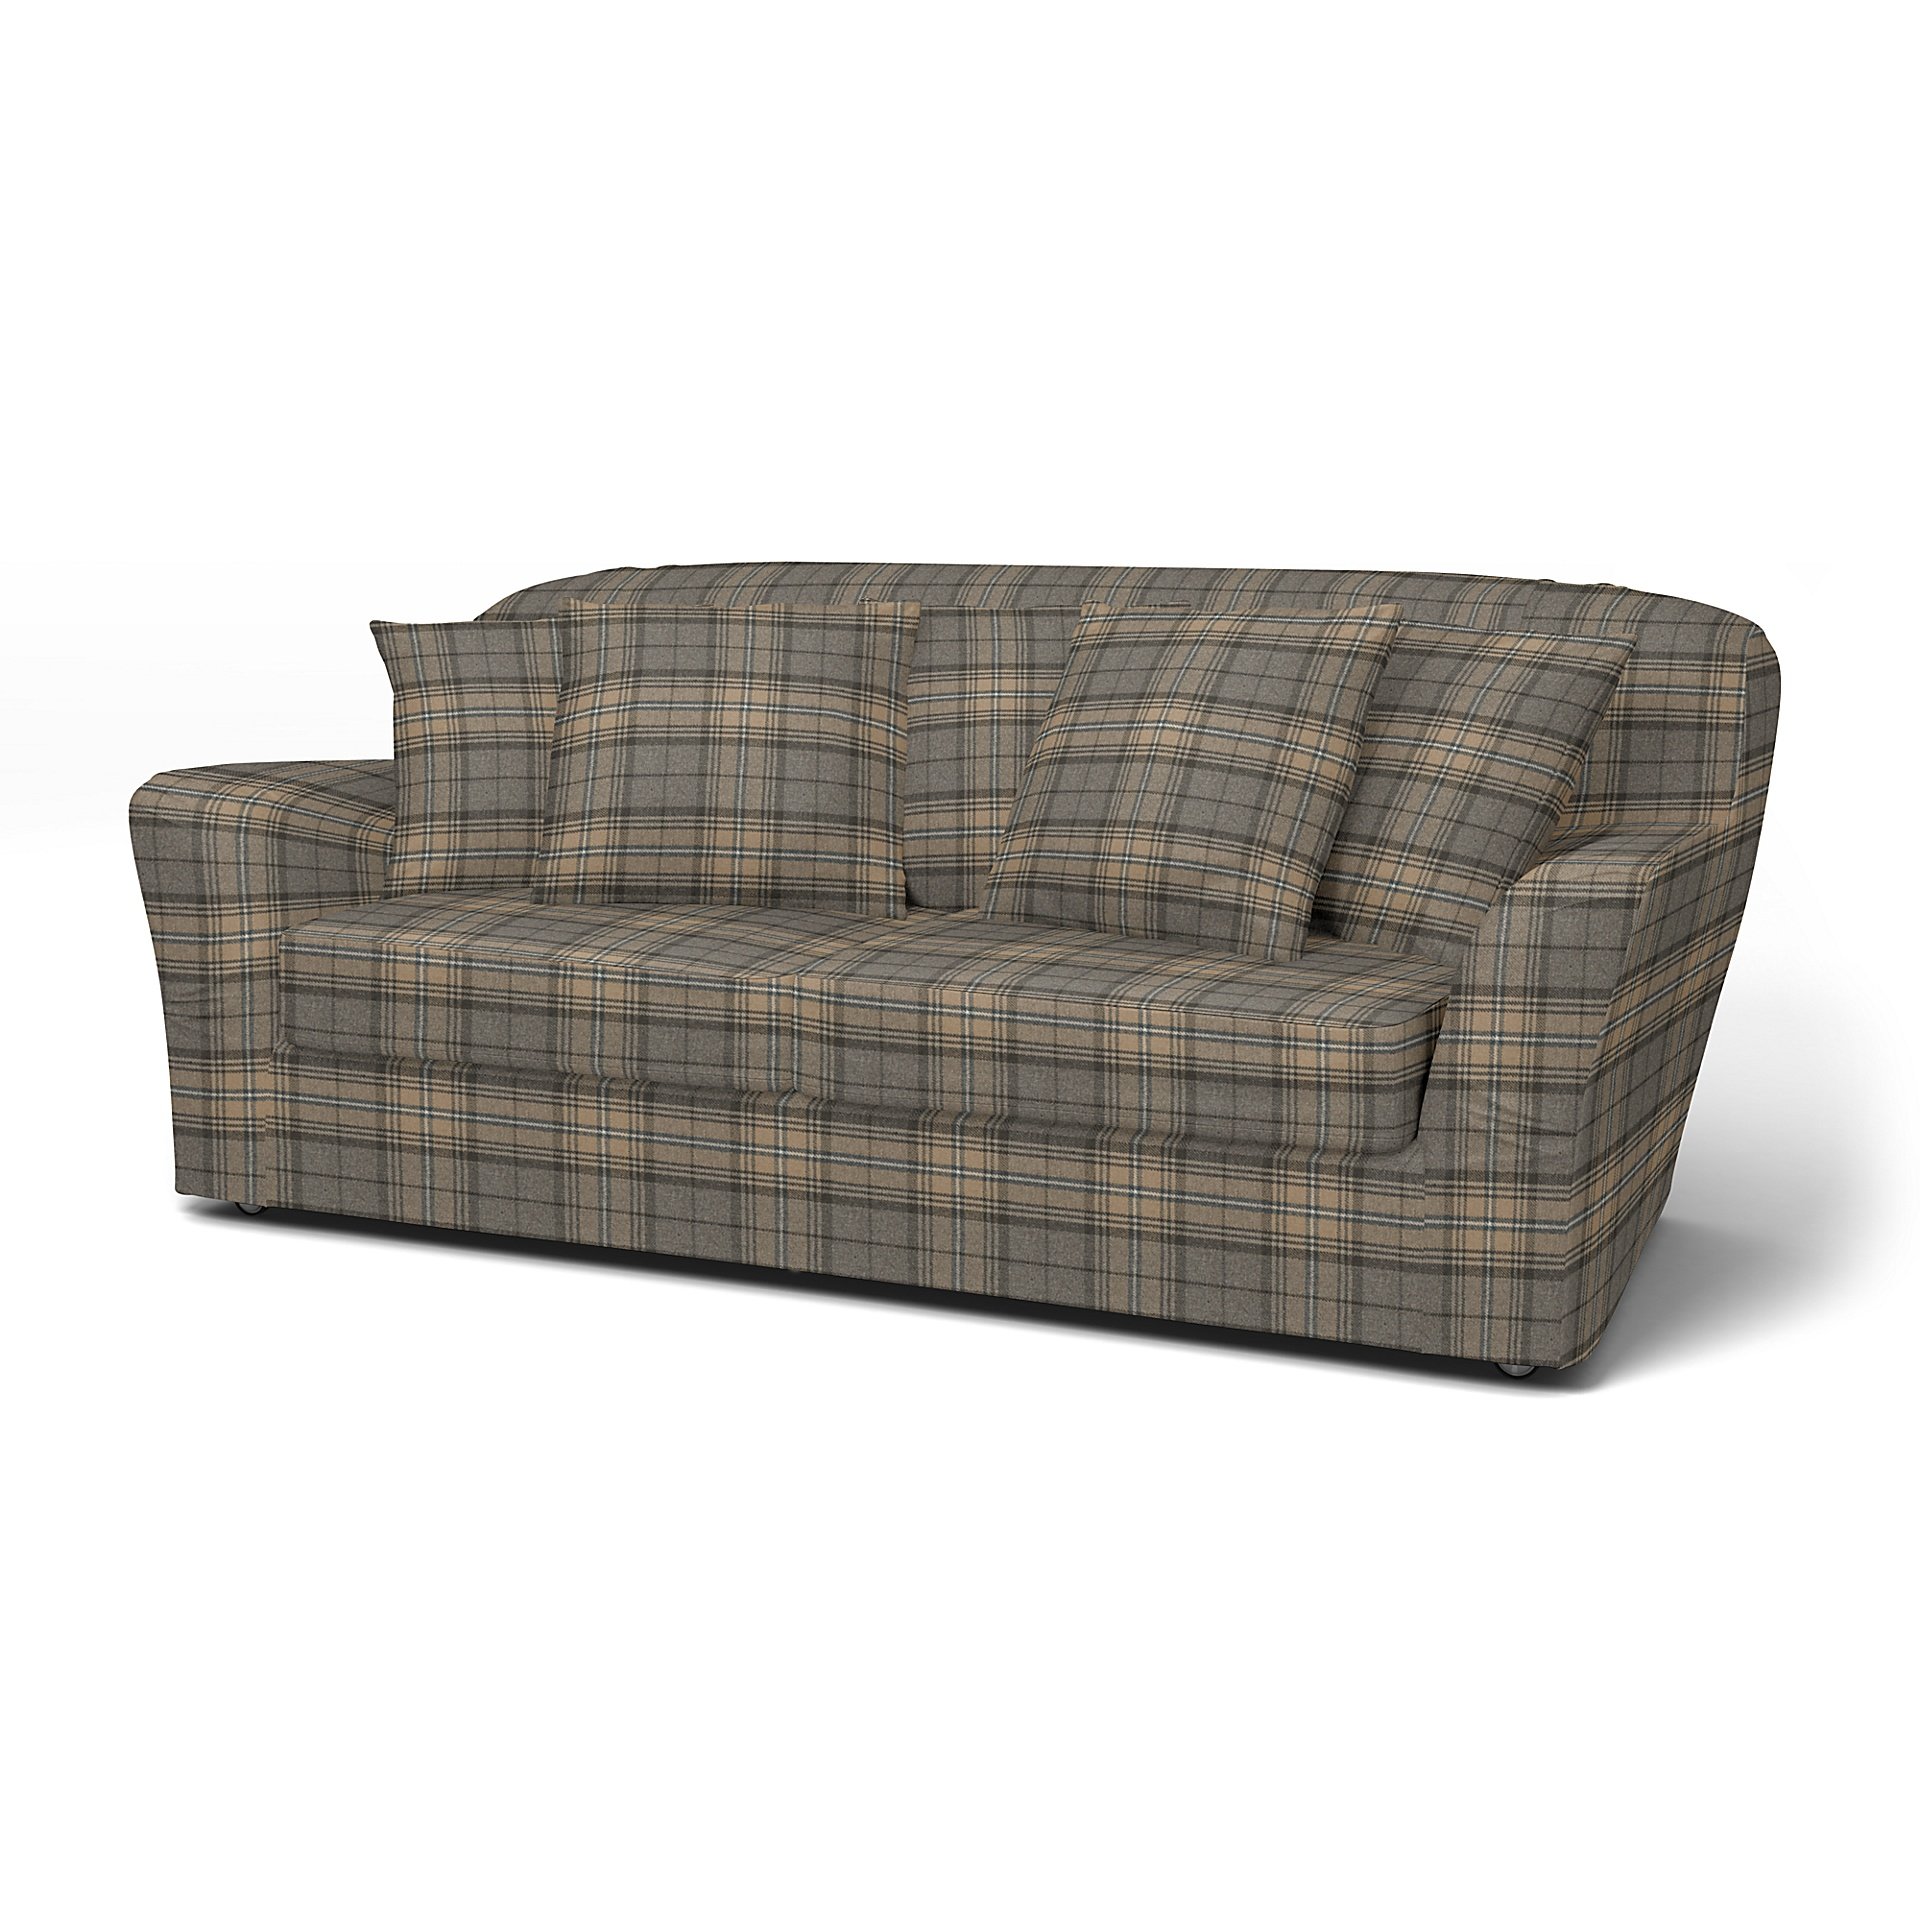 IKEA - Tomelilla Sofa Bed Cover (Small model), Bark Brown, Wool - Bemz